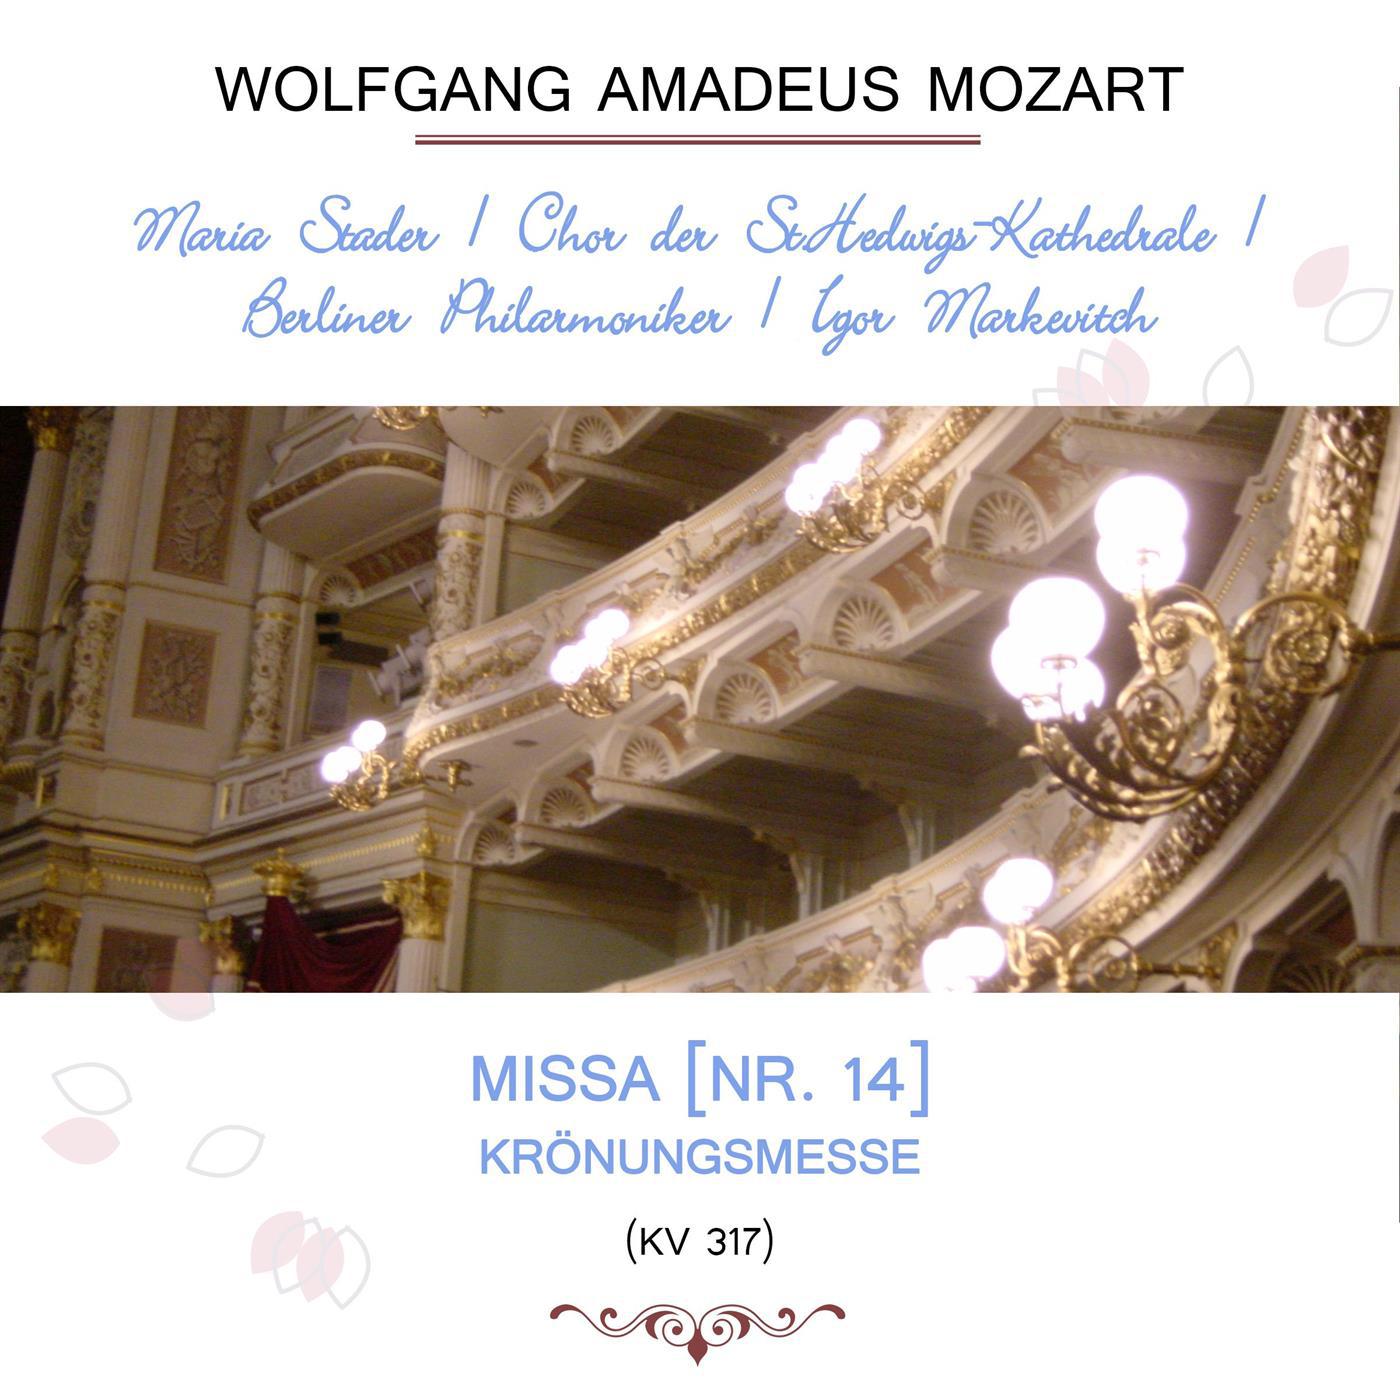 Maria Stader  Chor der St. HedwigsKathedrale  Berliner Philarmoniker  Igor Markevitch play: Wolfgang Amadeus Mozart: Missa Nr. 14, Kr nungsmesse, KV 317